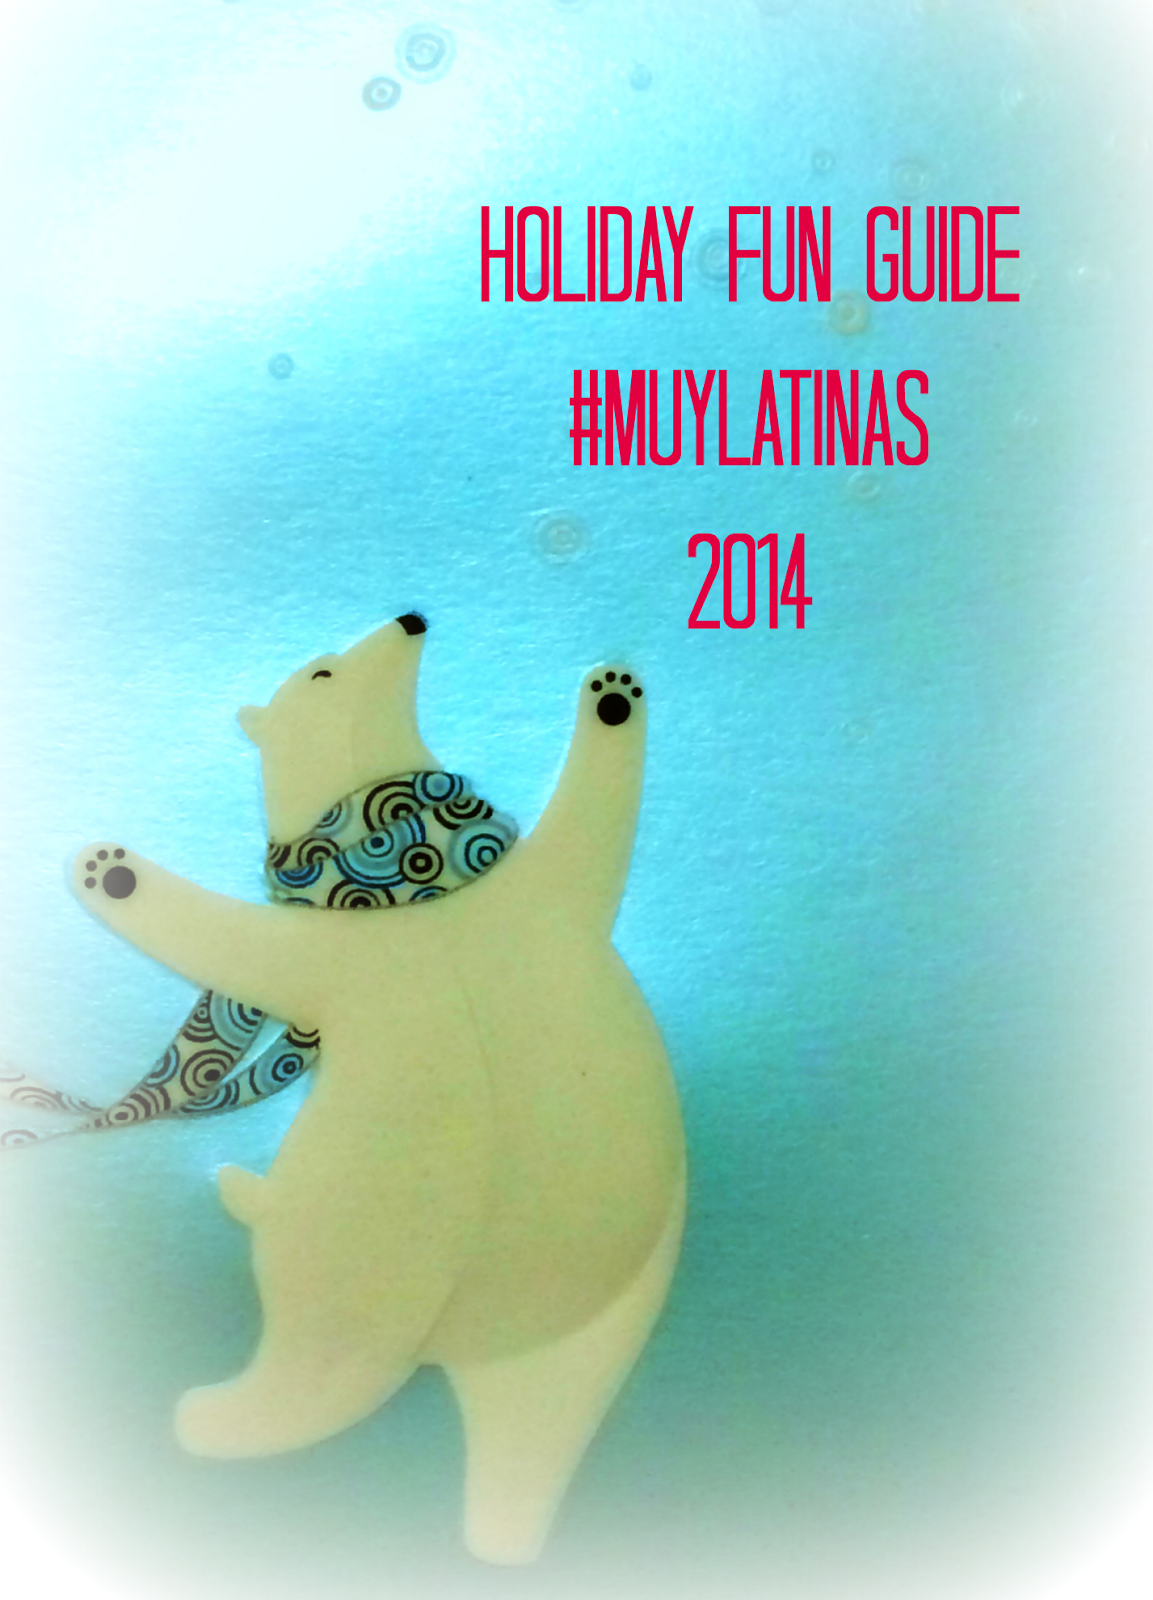 cool moms cool tips and muy latinas holiday fun guide